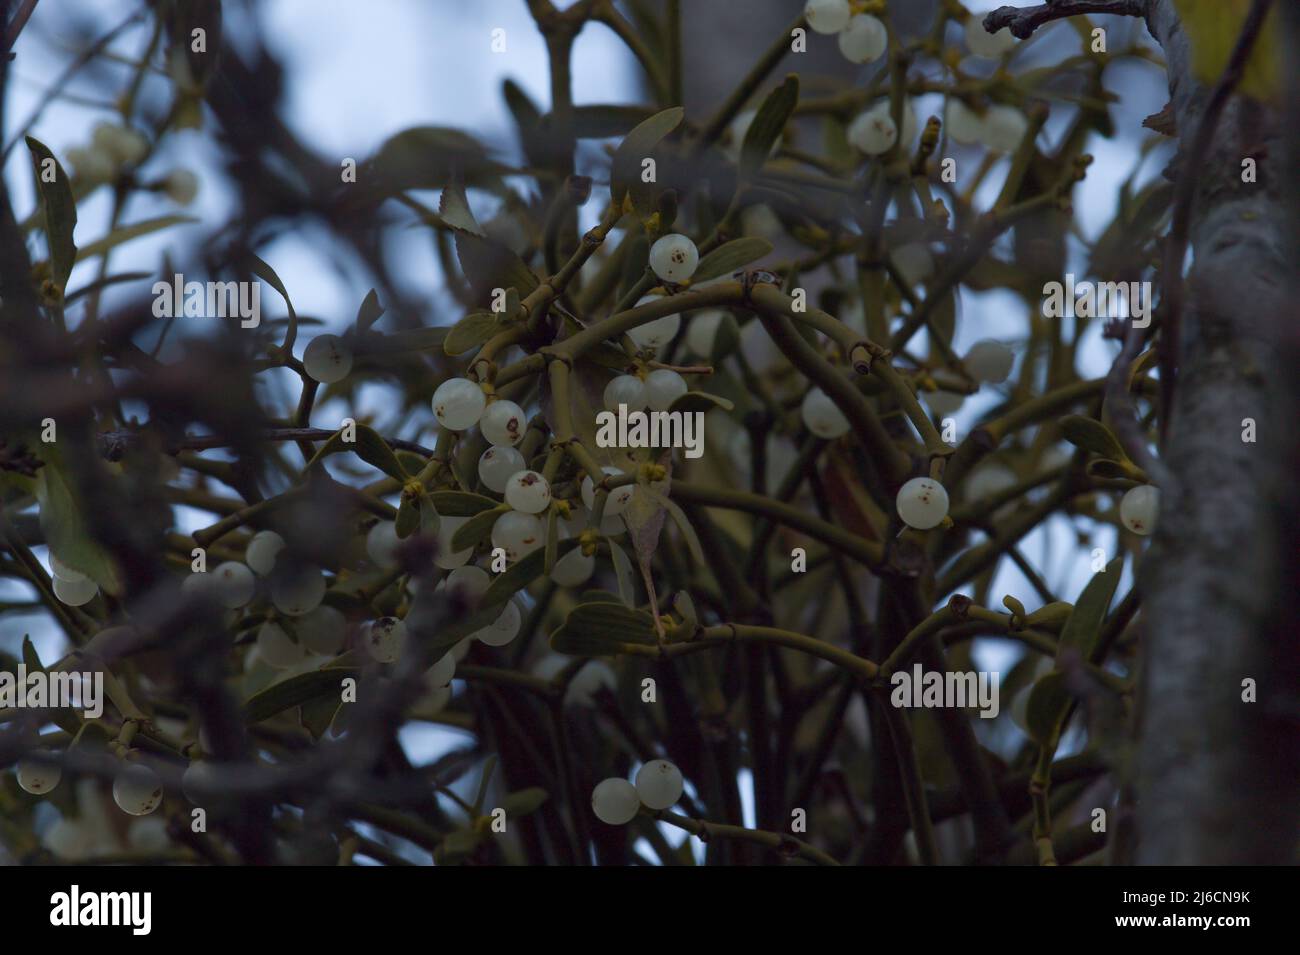 In nature, mistletoe (Viscum album) parasitizes on the tree. Stock Photo